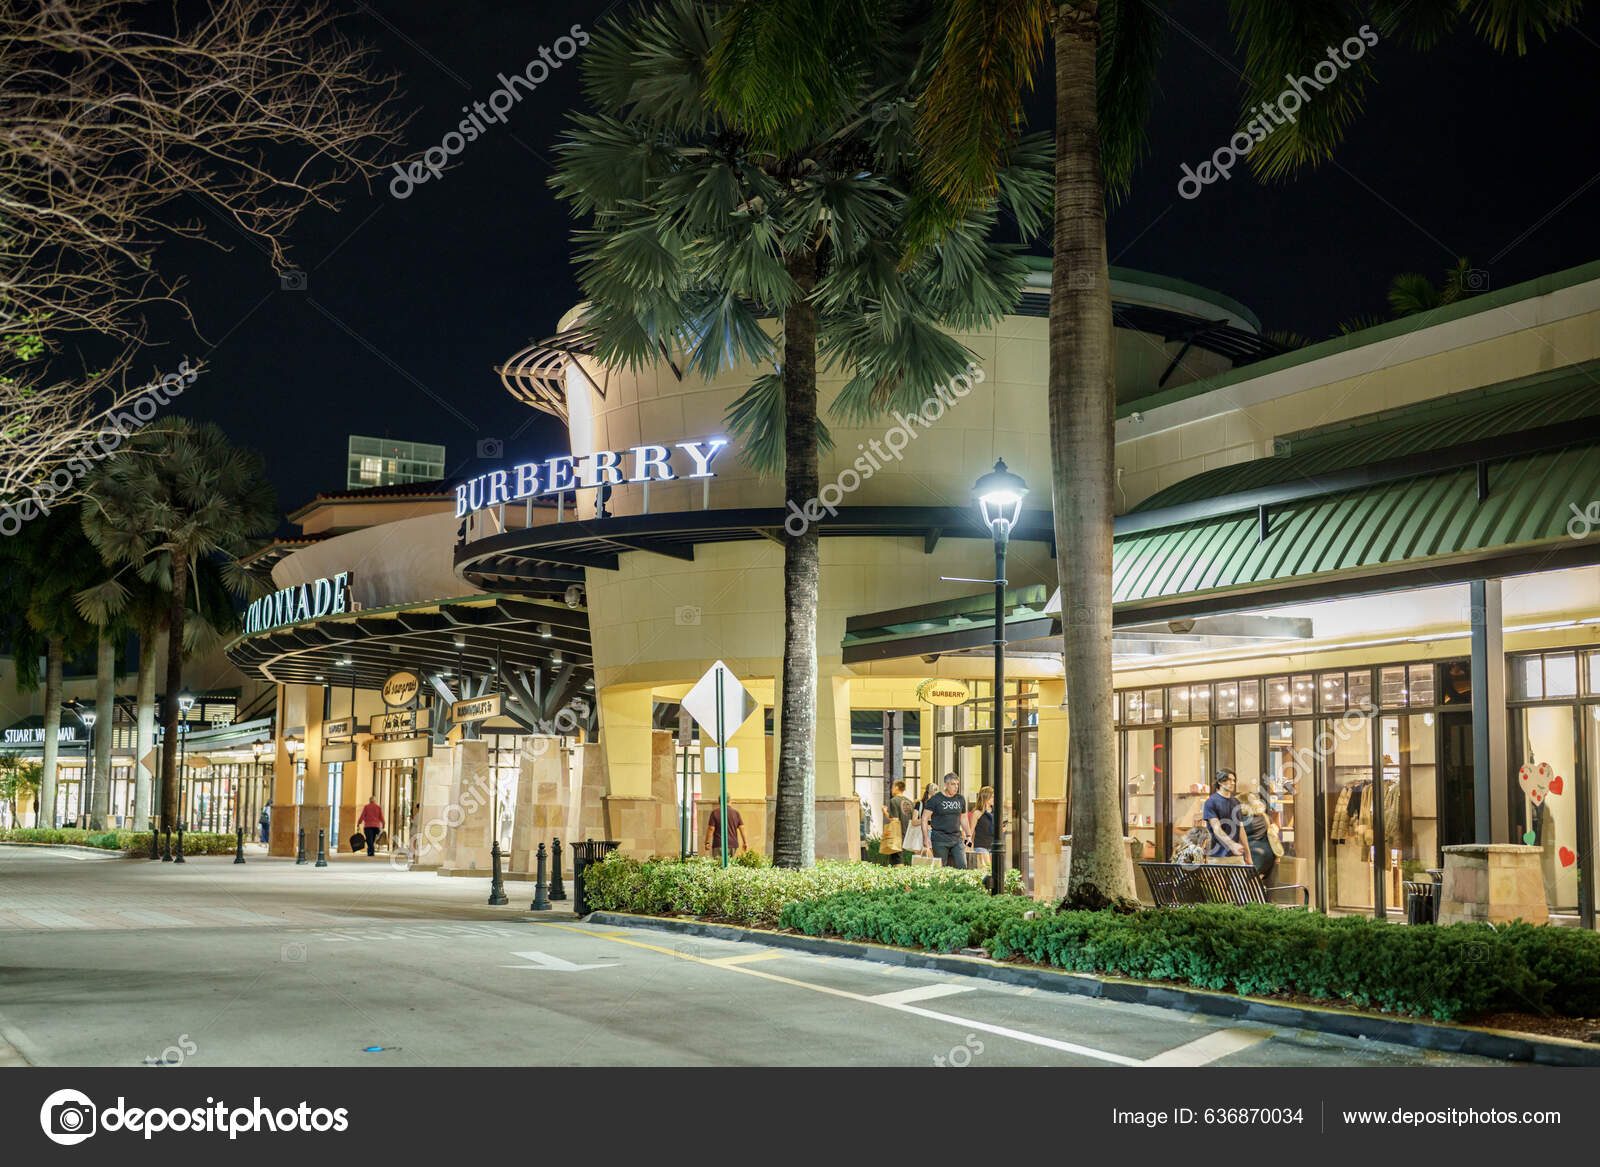 Sawgrass Mall 2023 - Miami